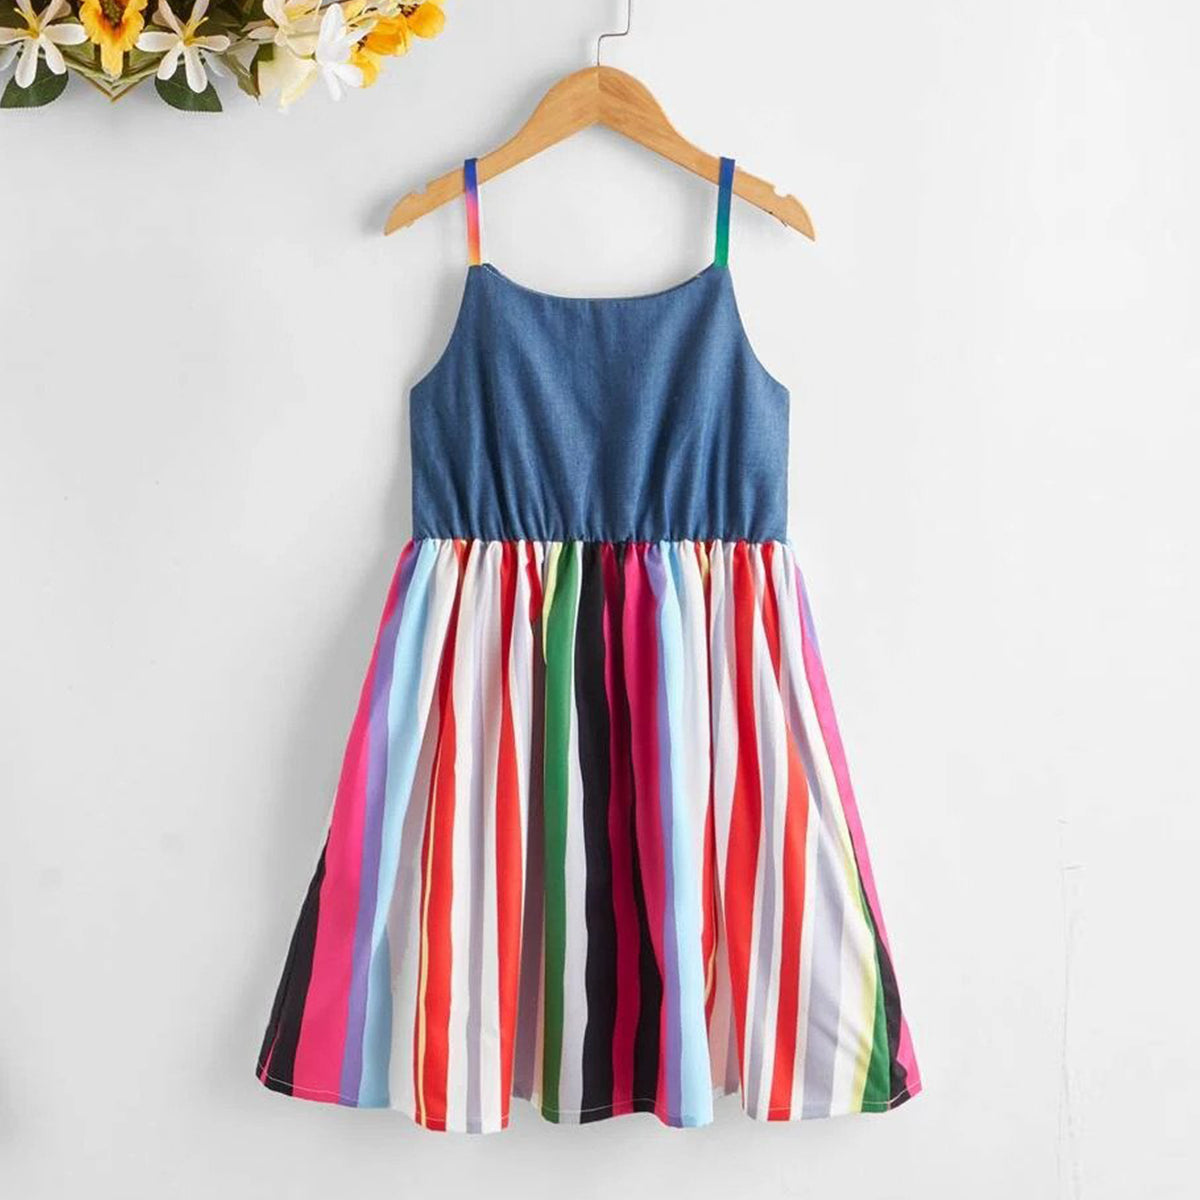 BabyGirl's Cotton Colorful Stripe Lining Frocks & Dresses for Kids.